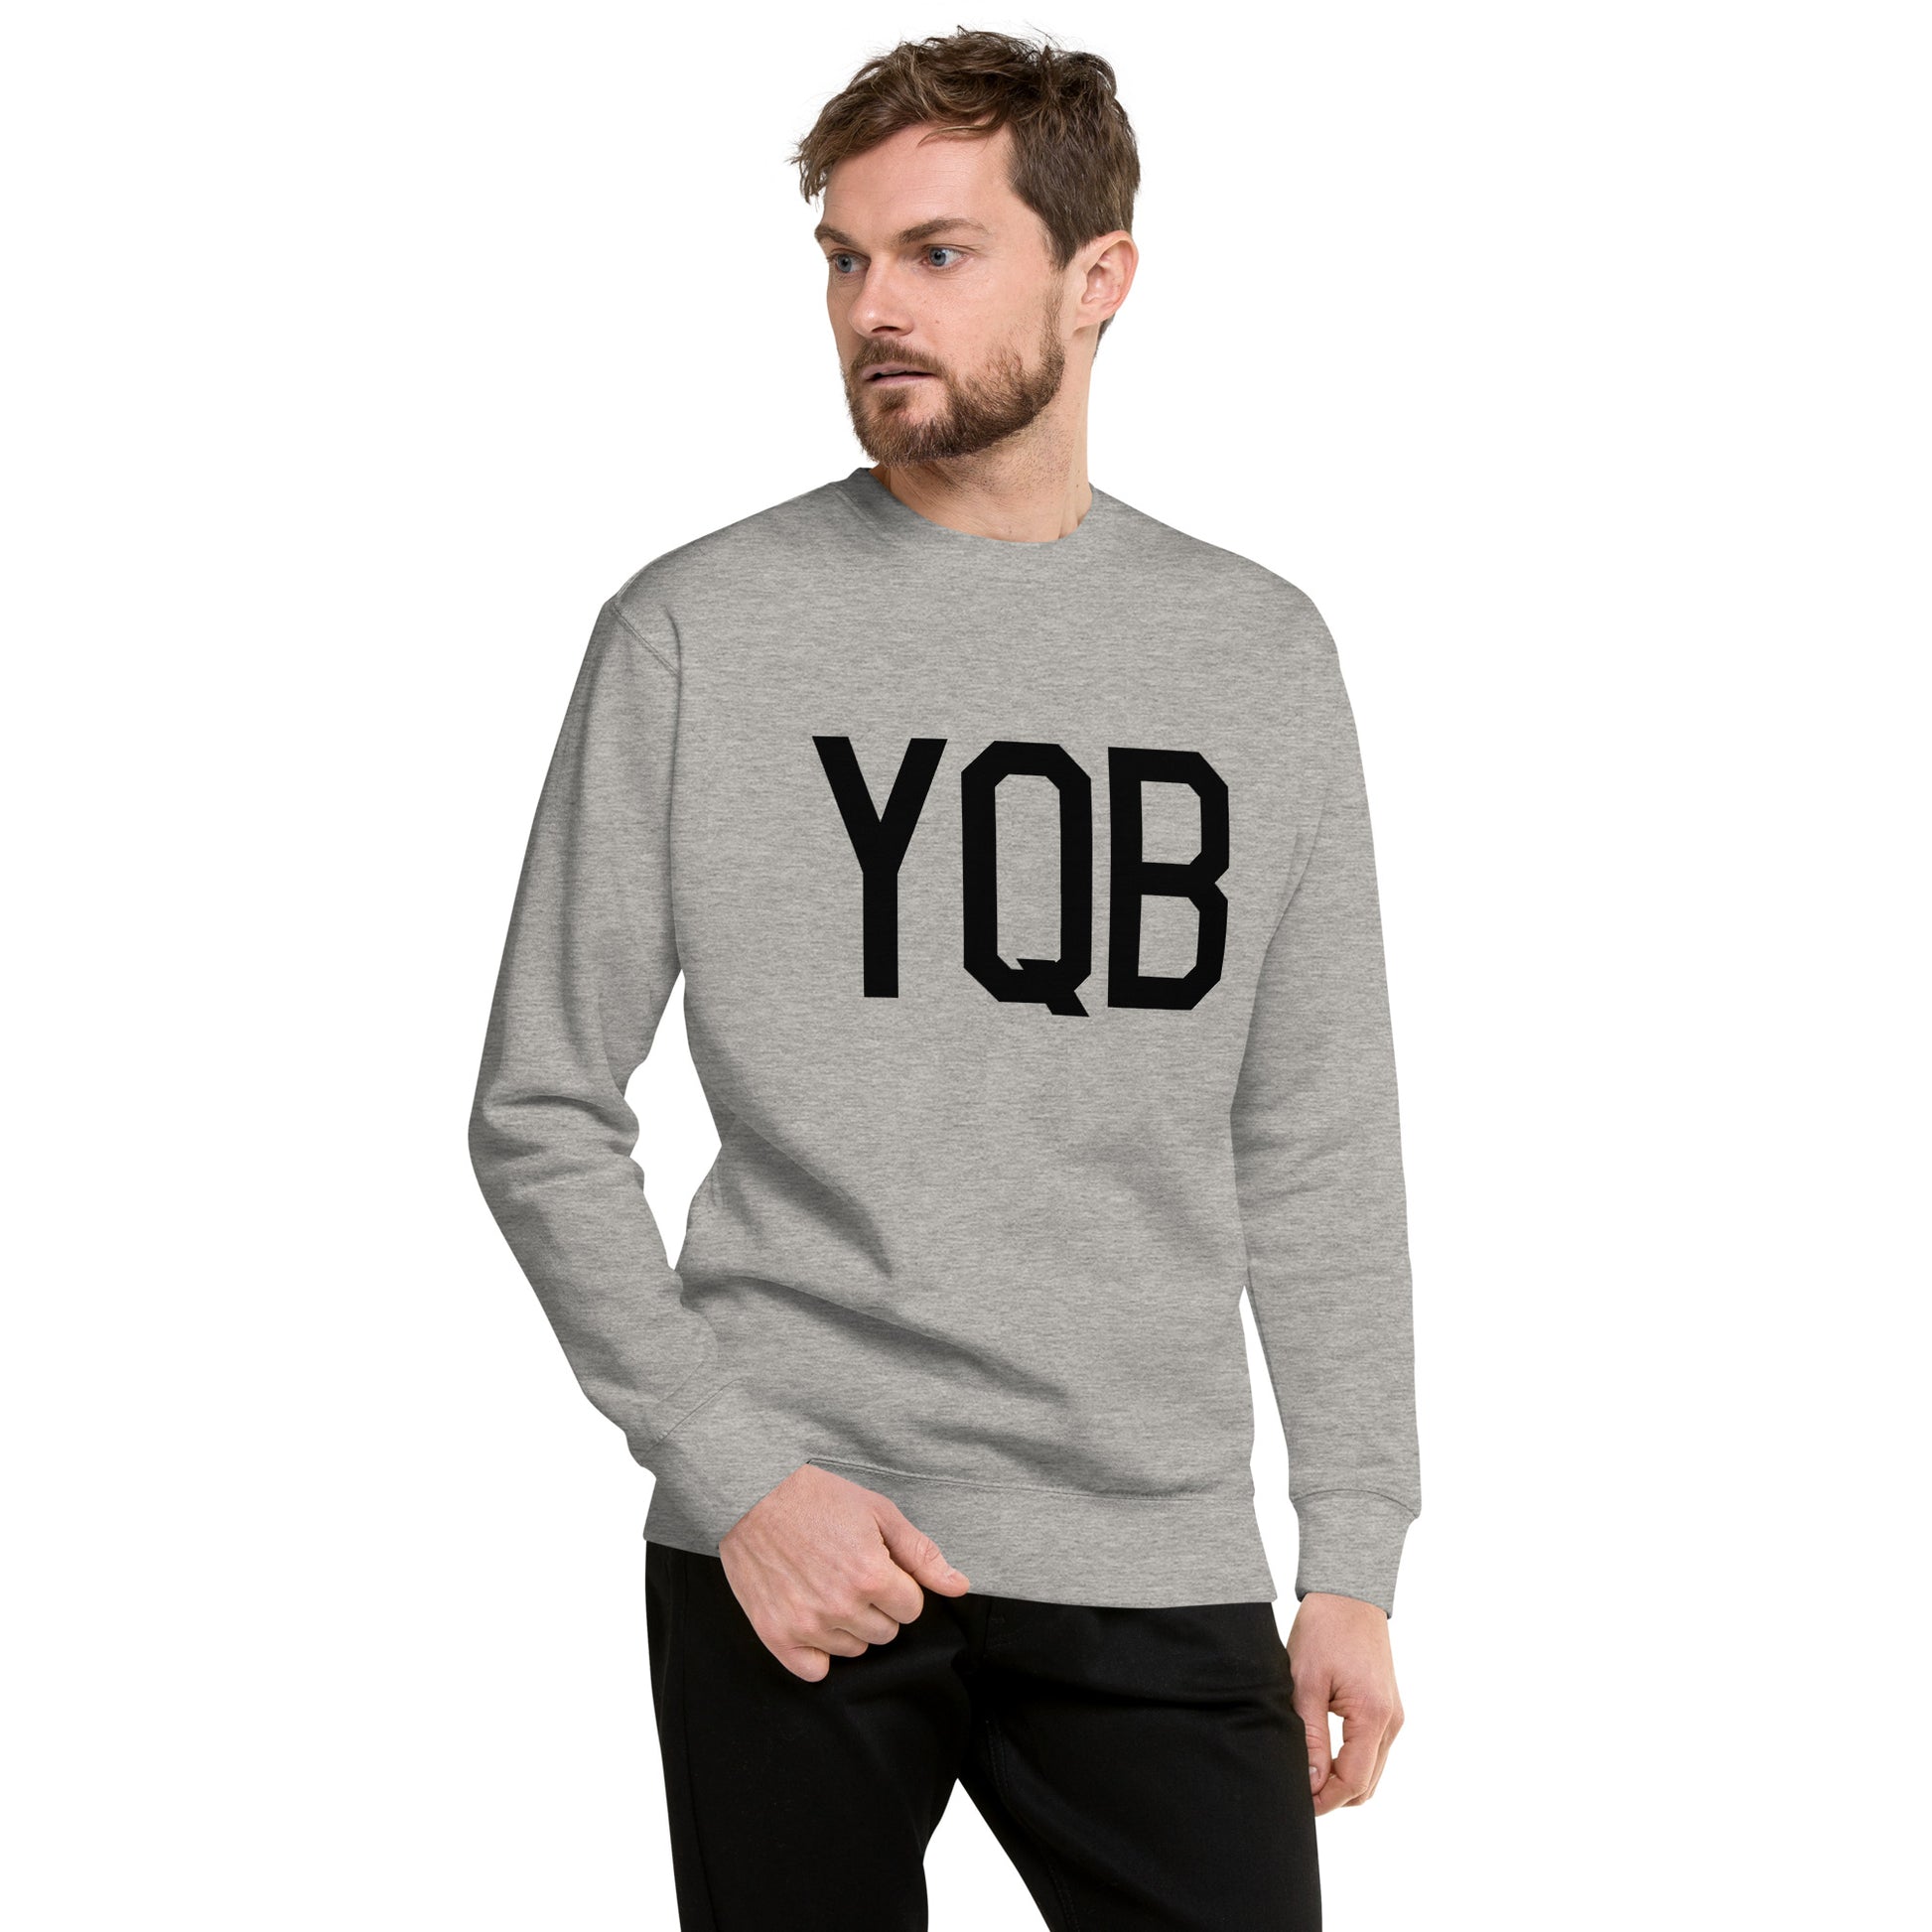 Aviation-Theme Premium Sweatshirt - Black • YQB Quebec City • YHM Designs - Image 01